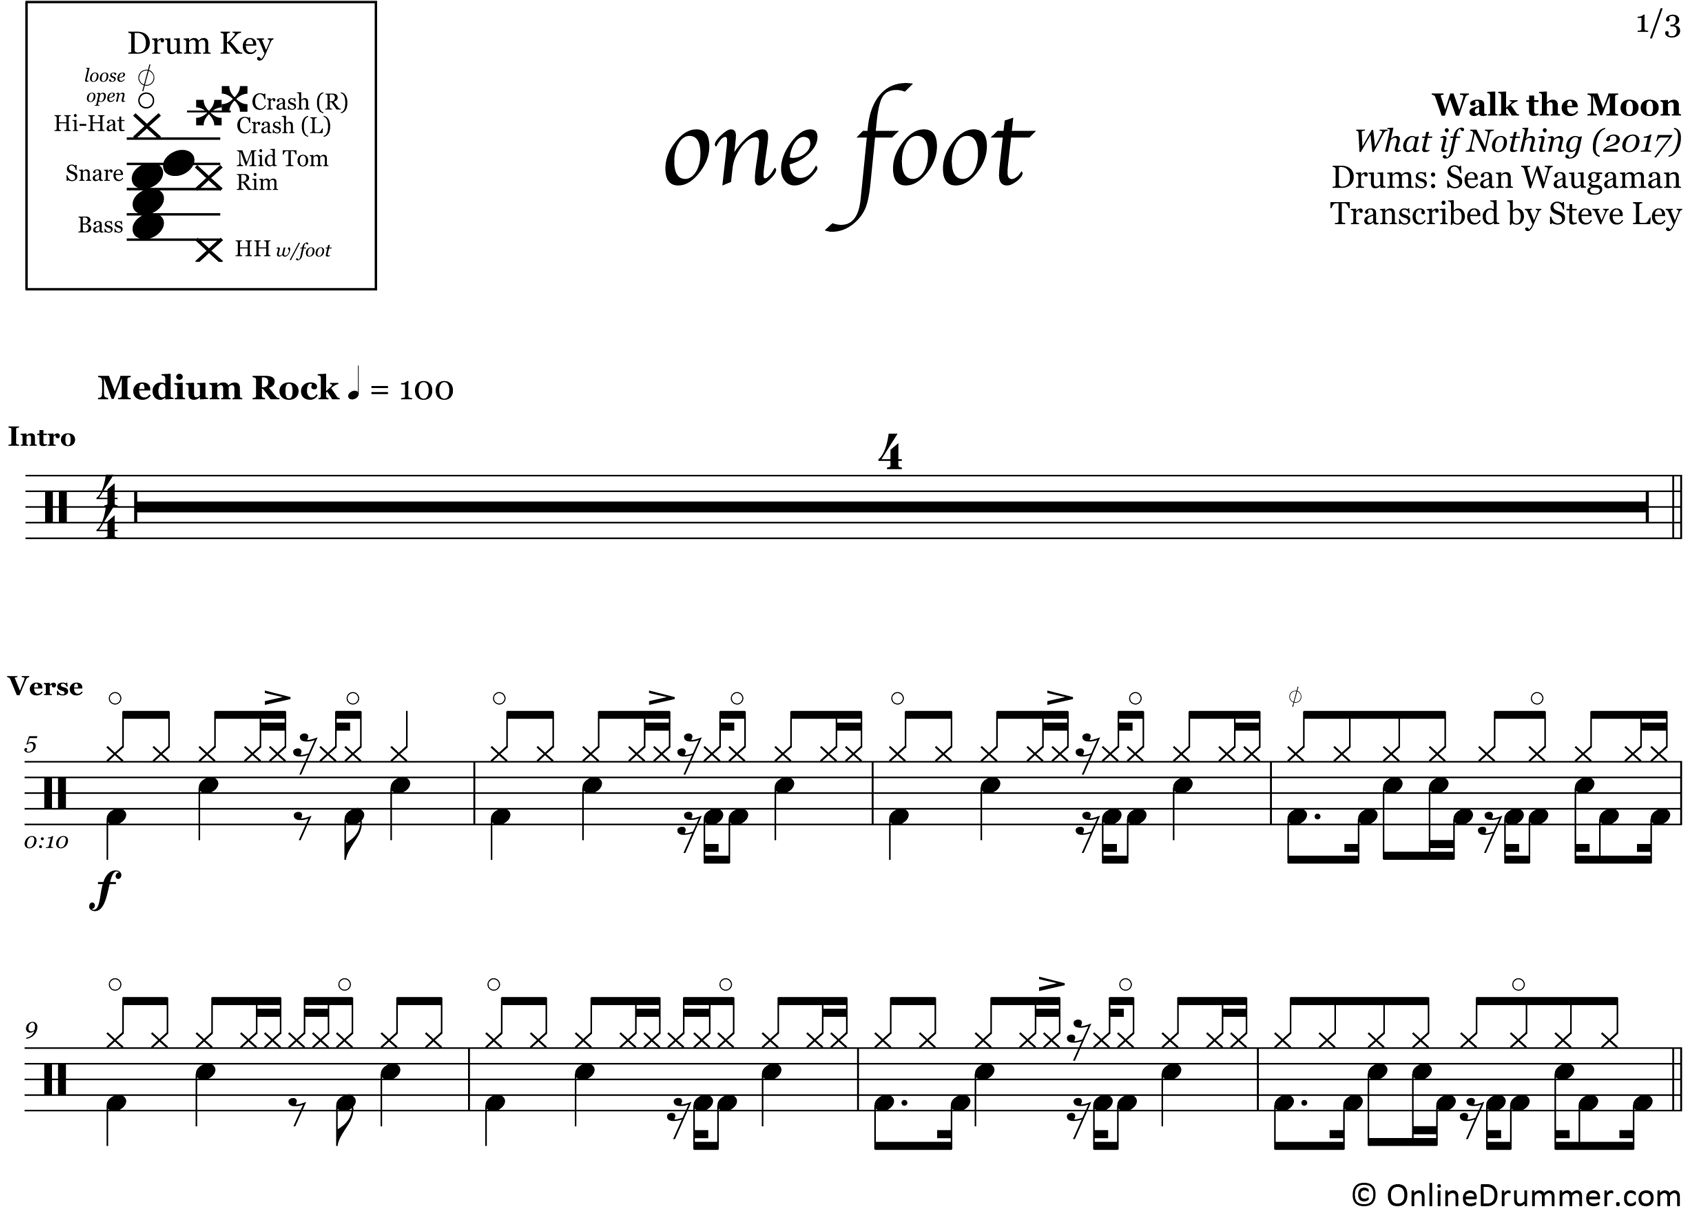 One Foot - Walk The Moon - Drum Sheet Music